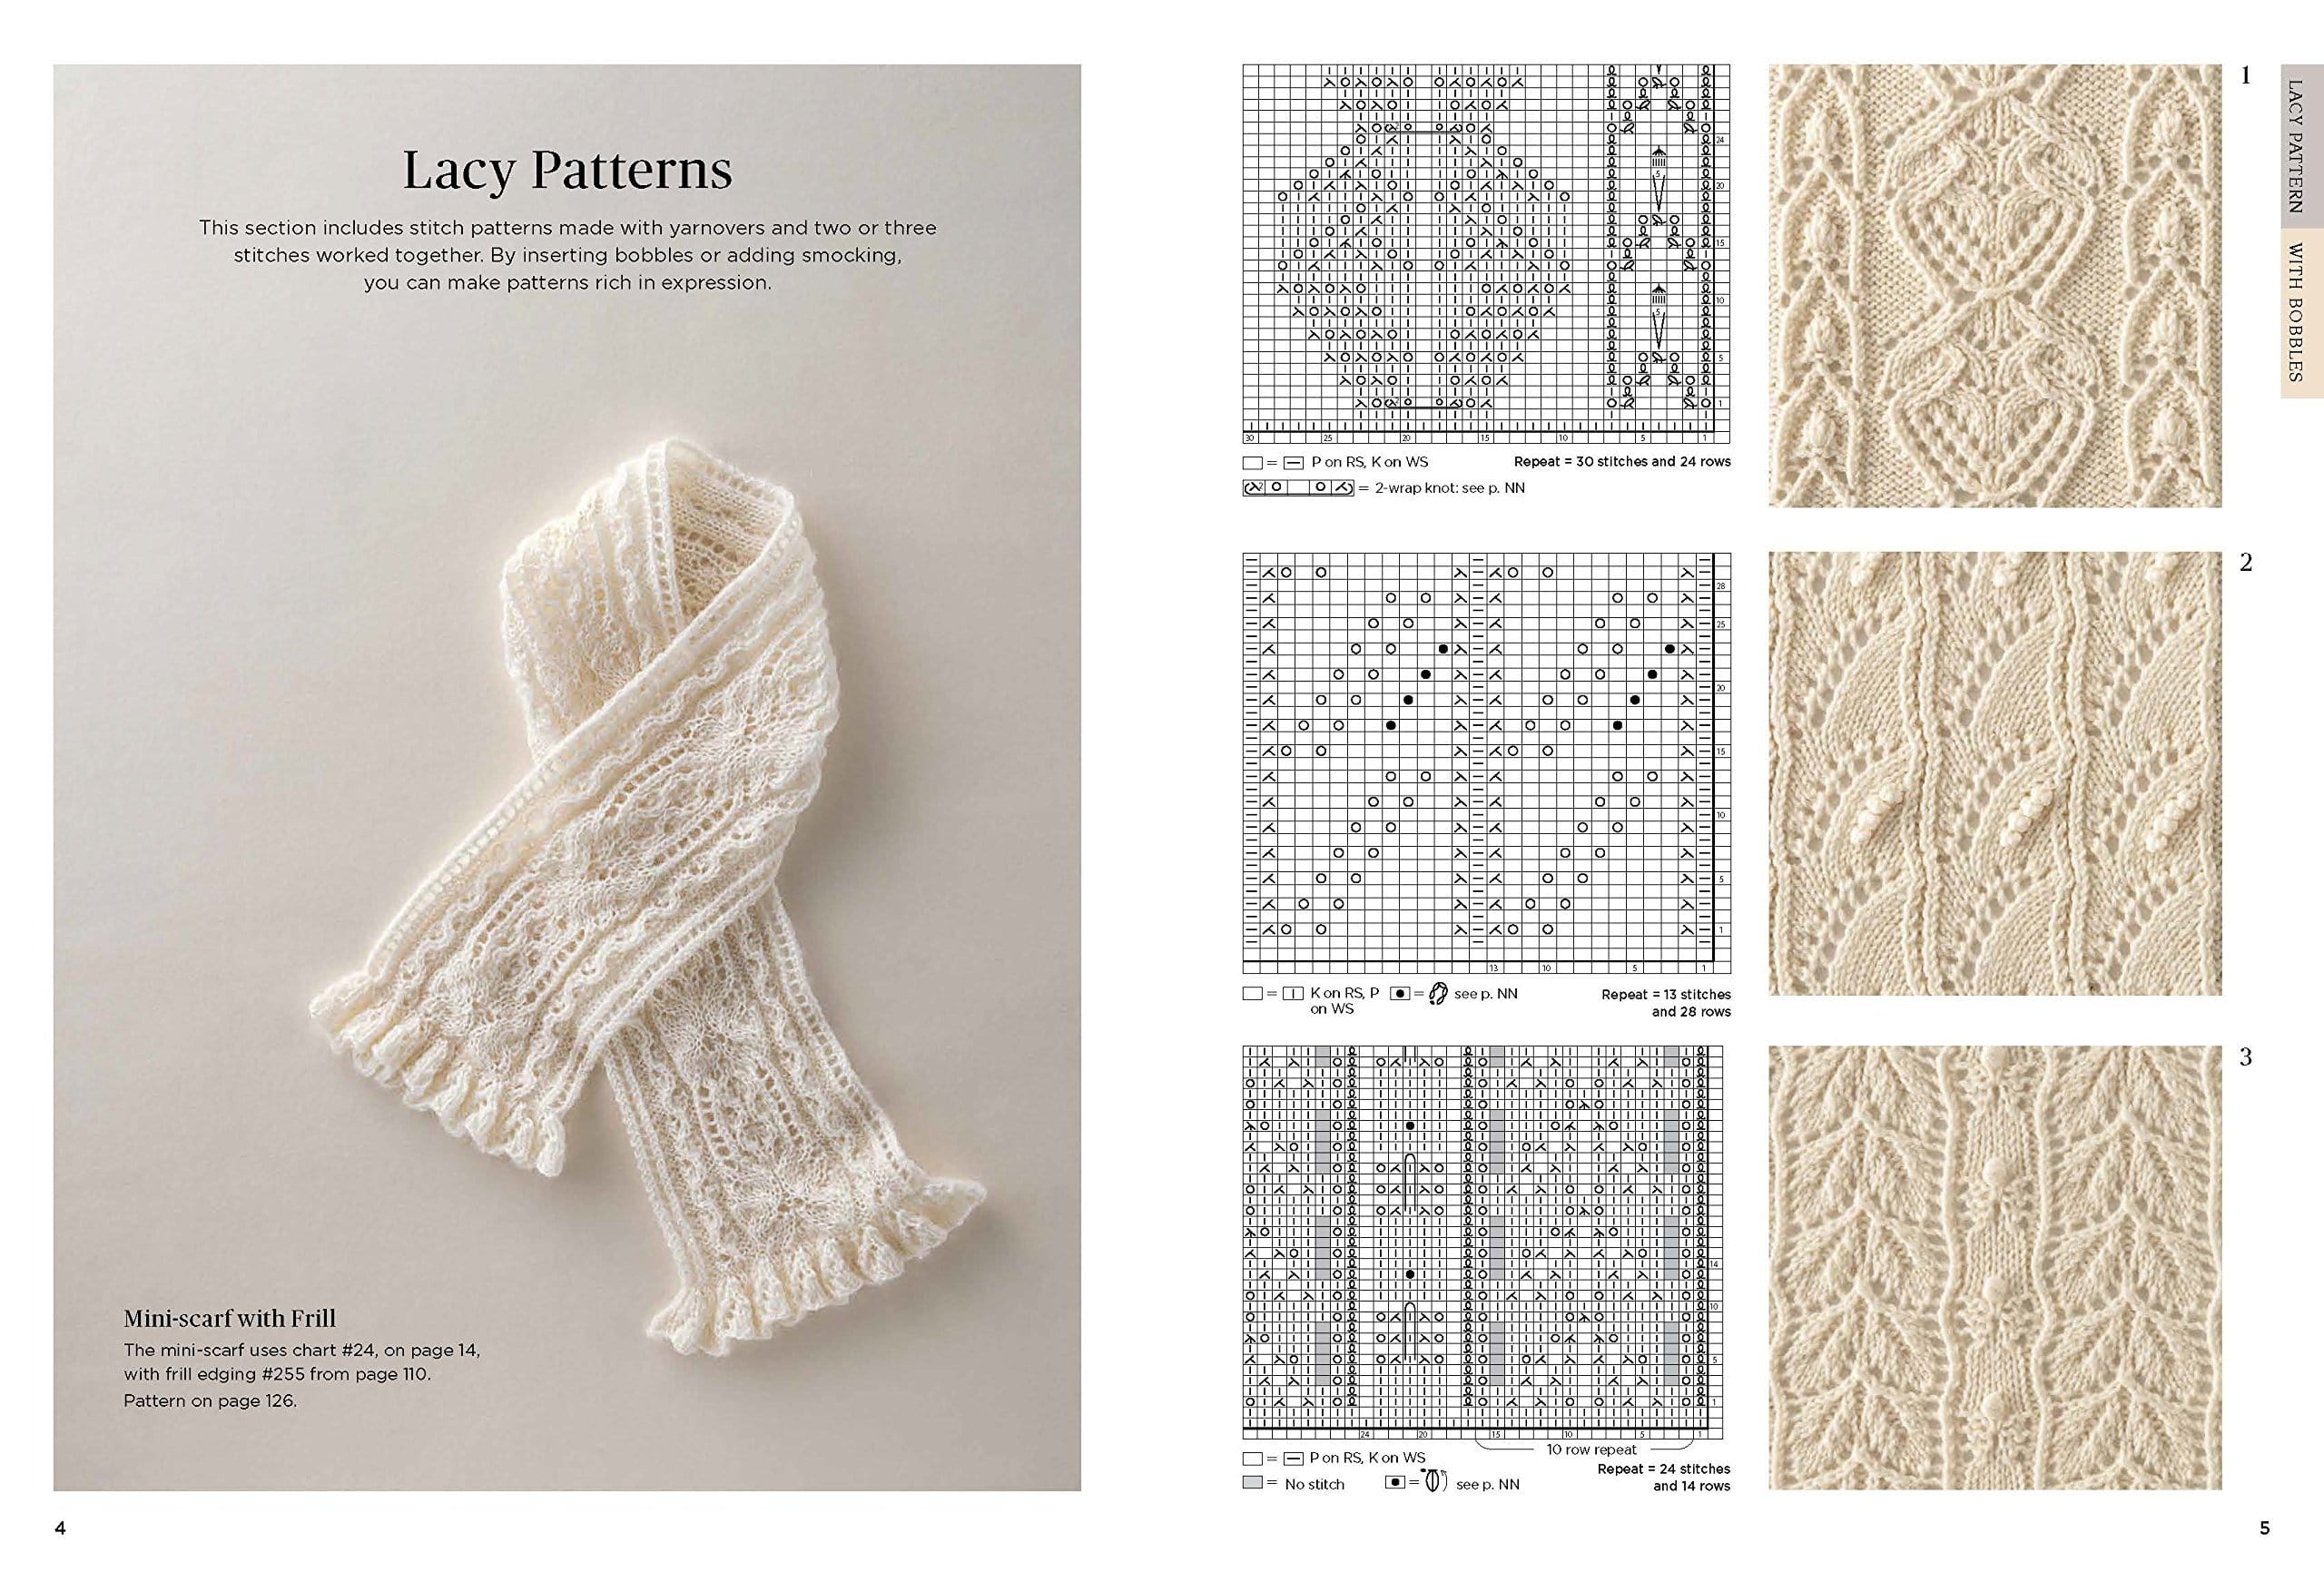 Japanese Knitting Stitch Bible: 260 Exquisite Patterns by Hitomi Shida [Book]